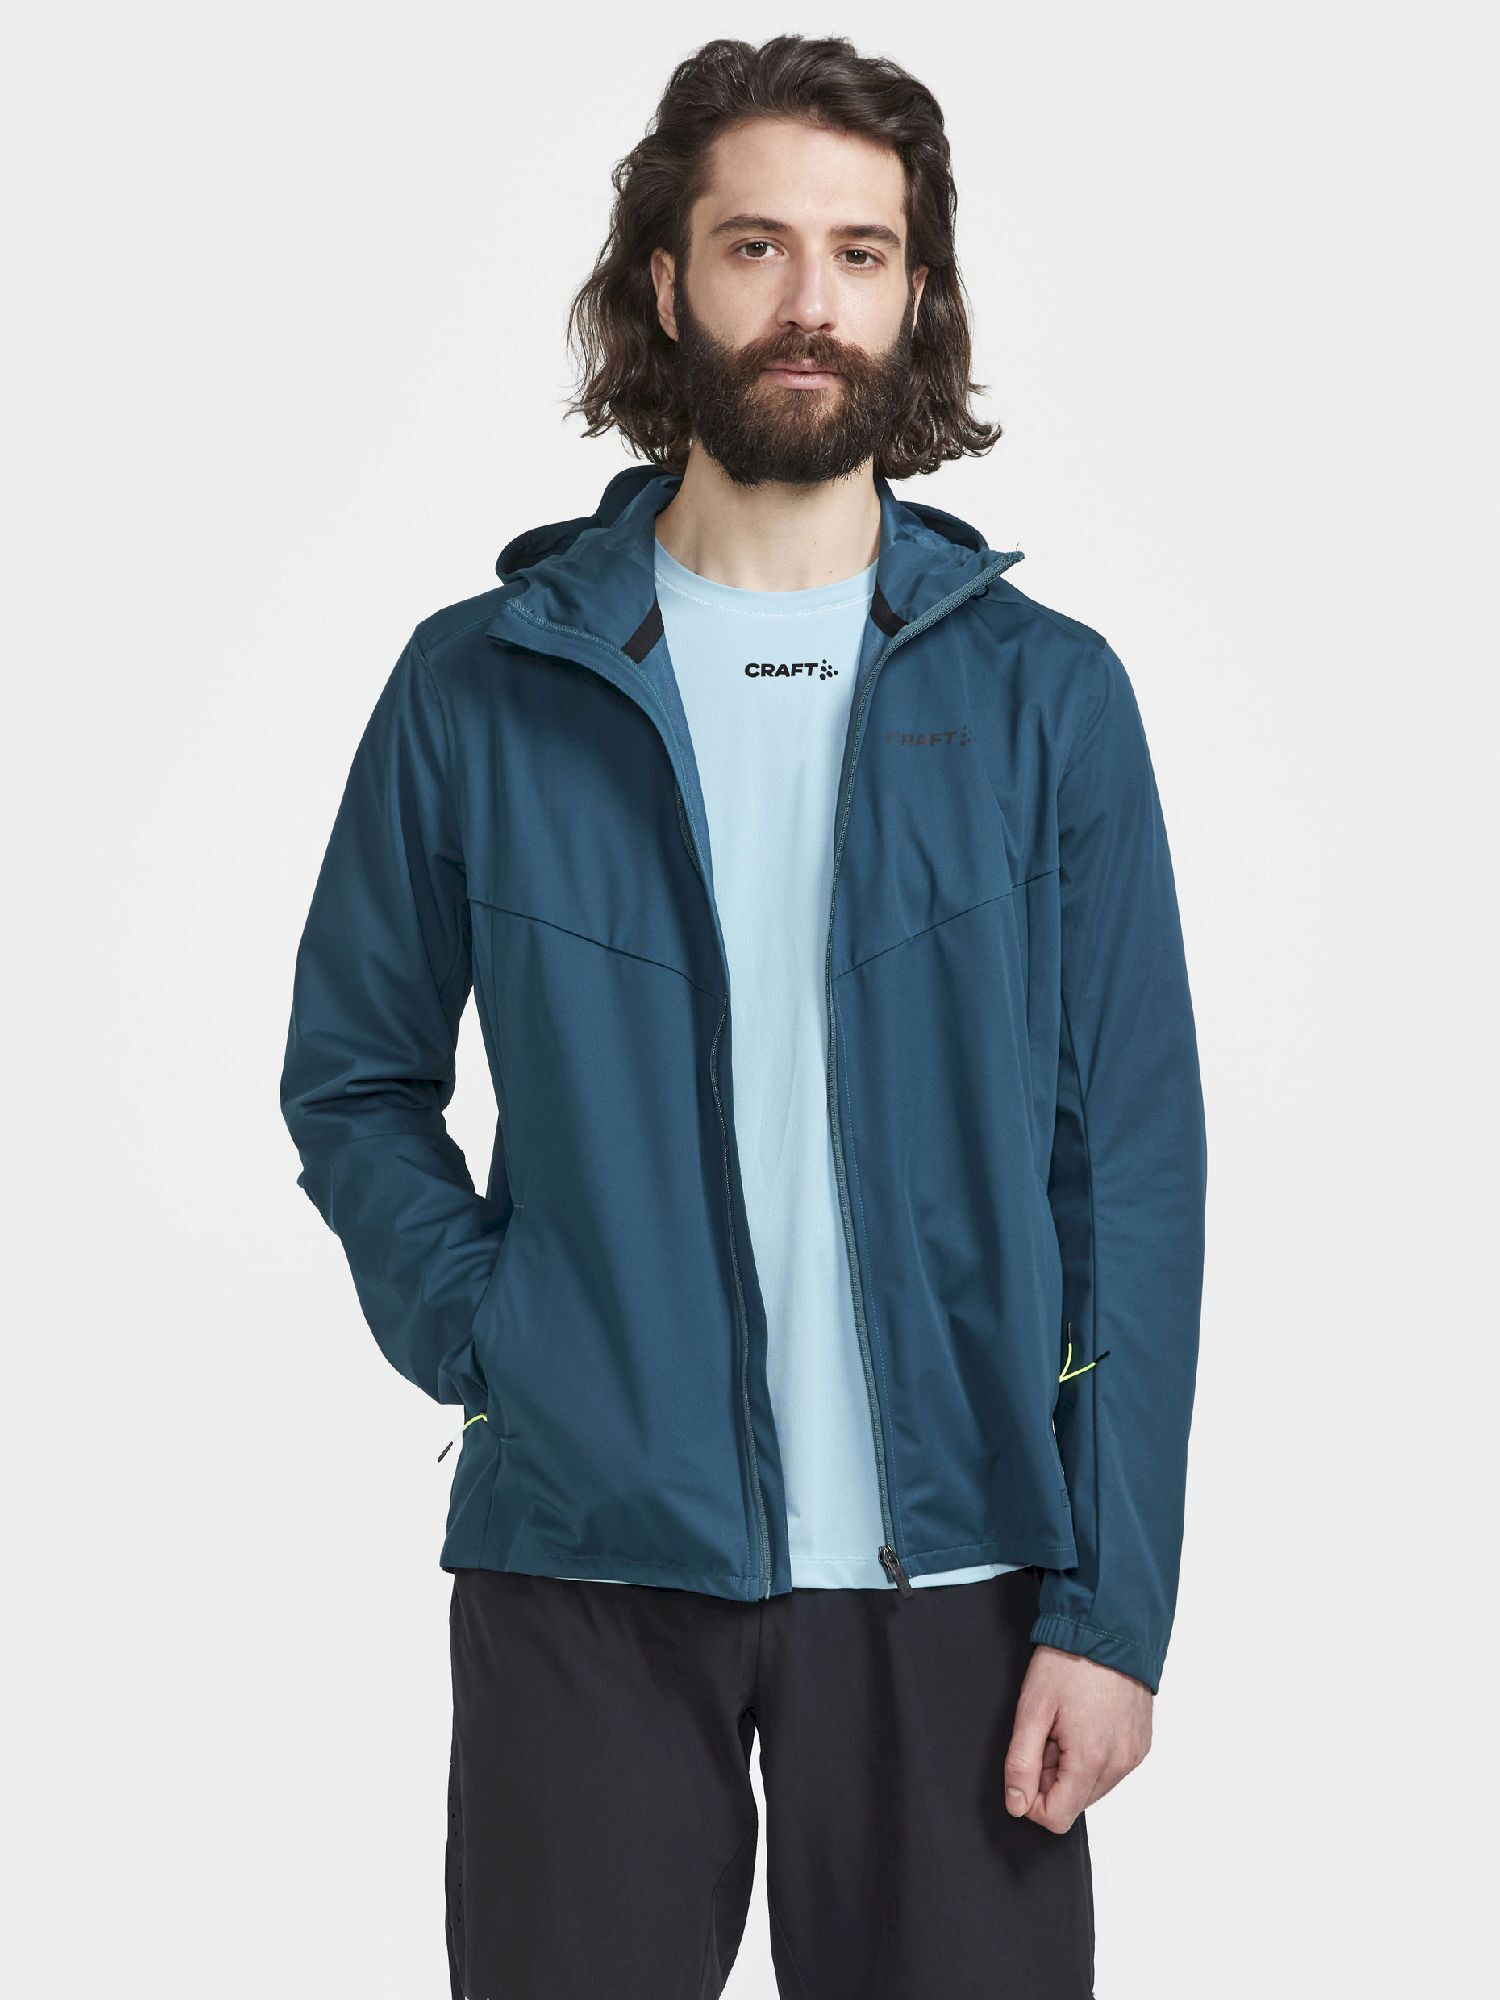 Craft ADV Essence Hydro Jacket - Waterproof jacket - Men's